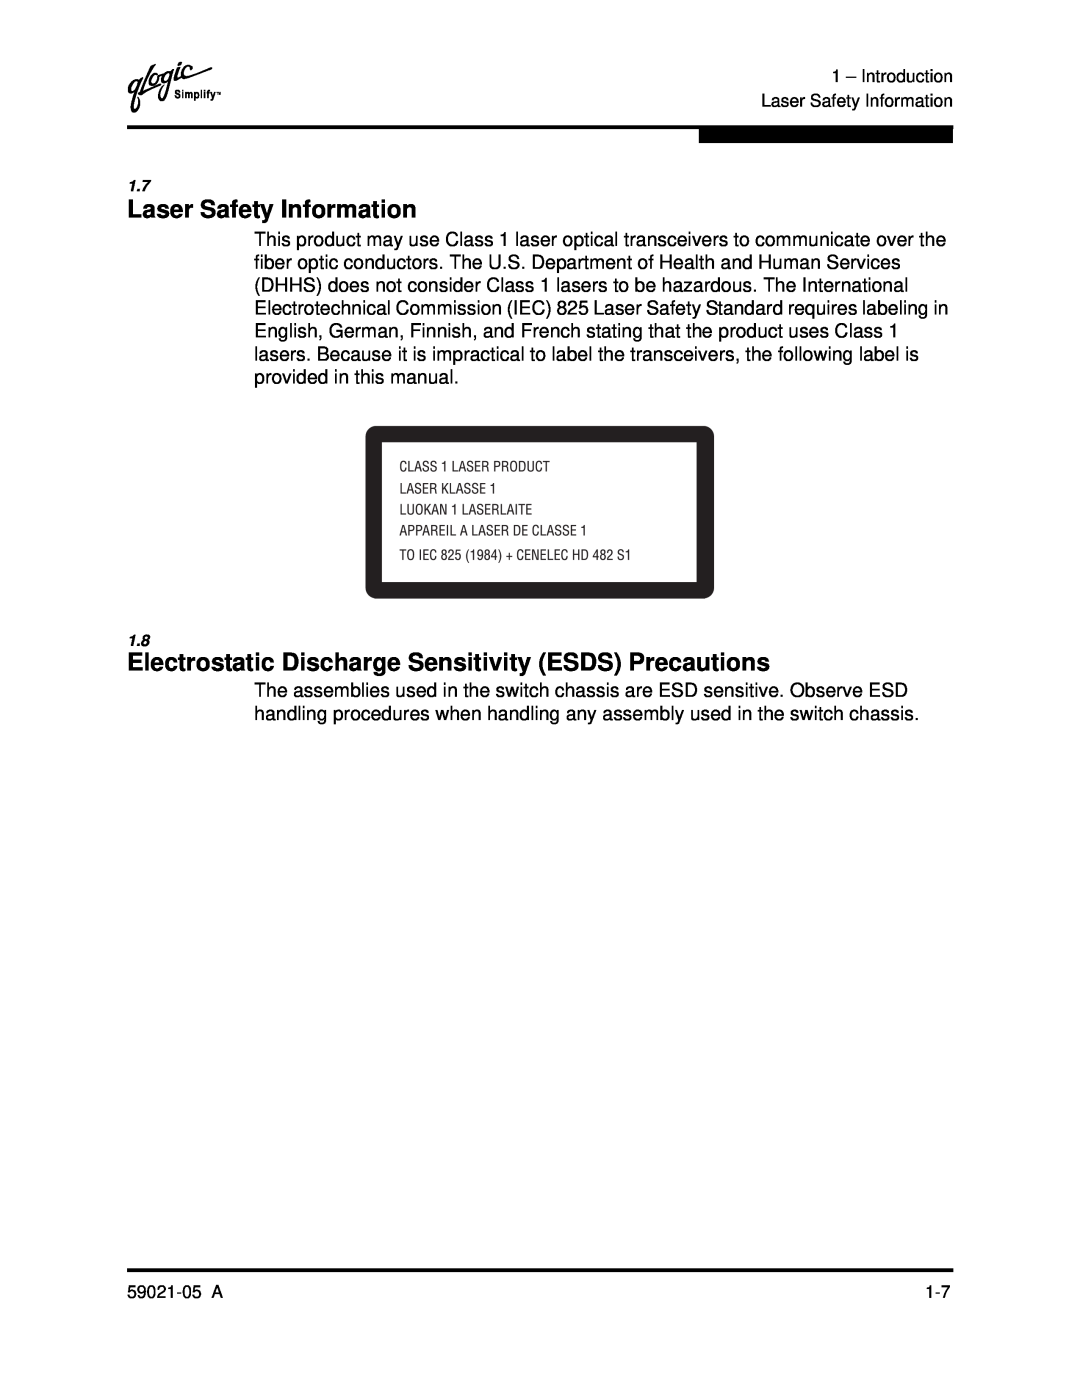 Q-Logic 59021-05 manual Laser Safety Information, Electrostatic Discharge Sensitivity ESDS Precautions 